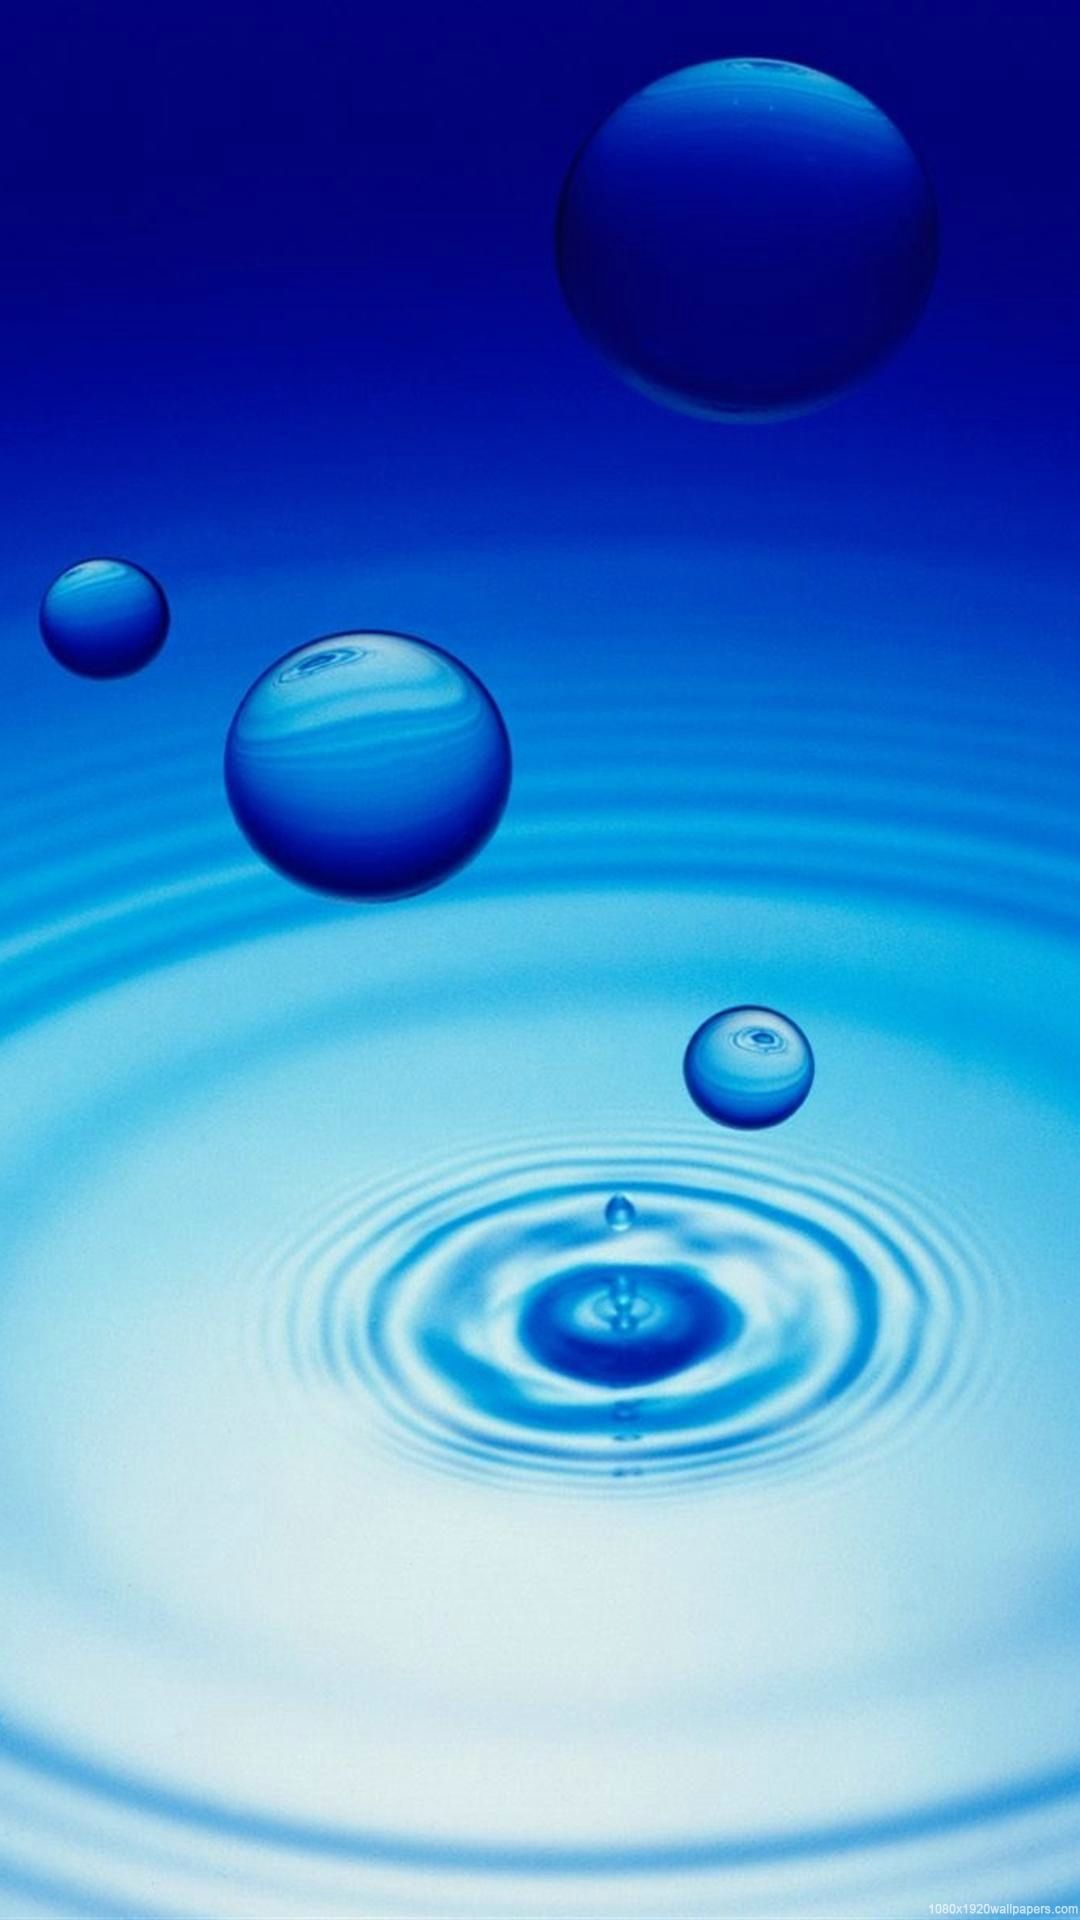 1080p wallpapers,blue,water,drop,water resources,liquid